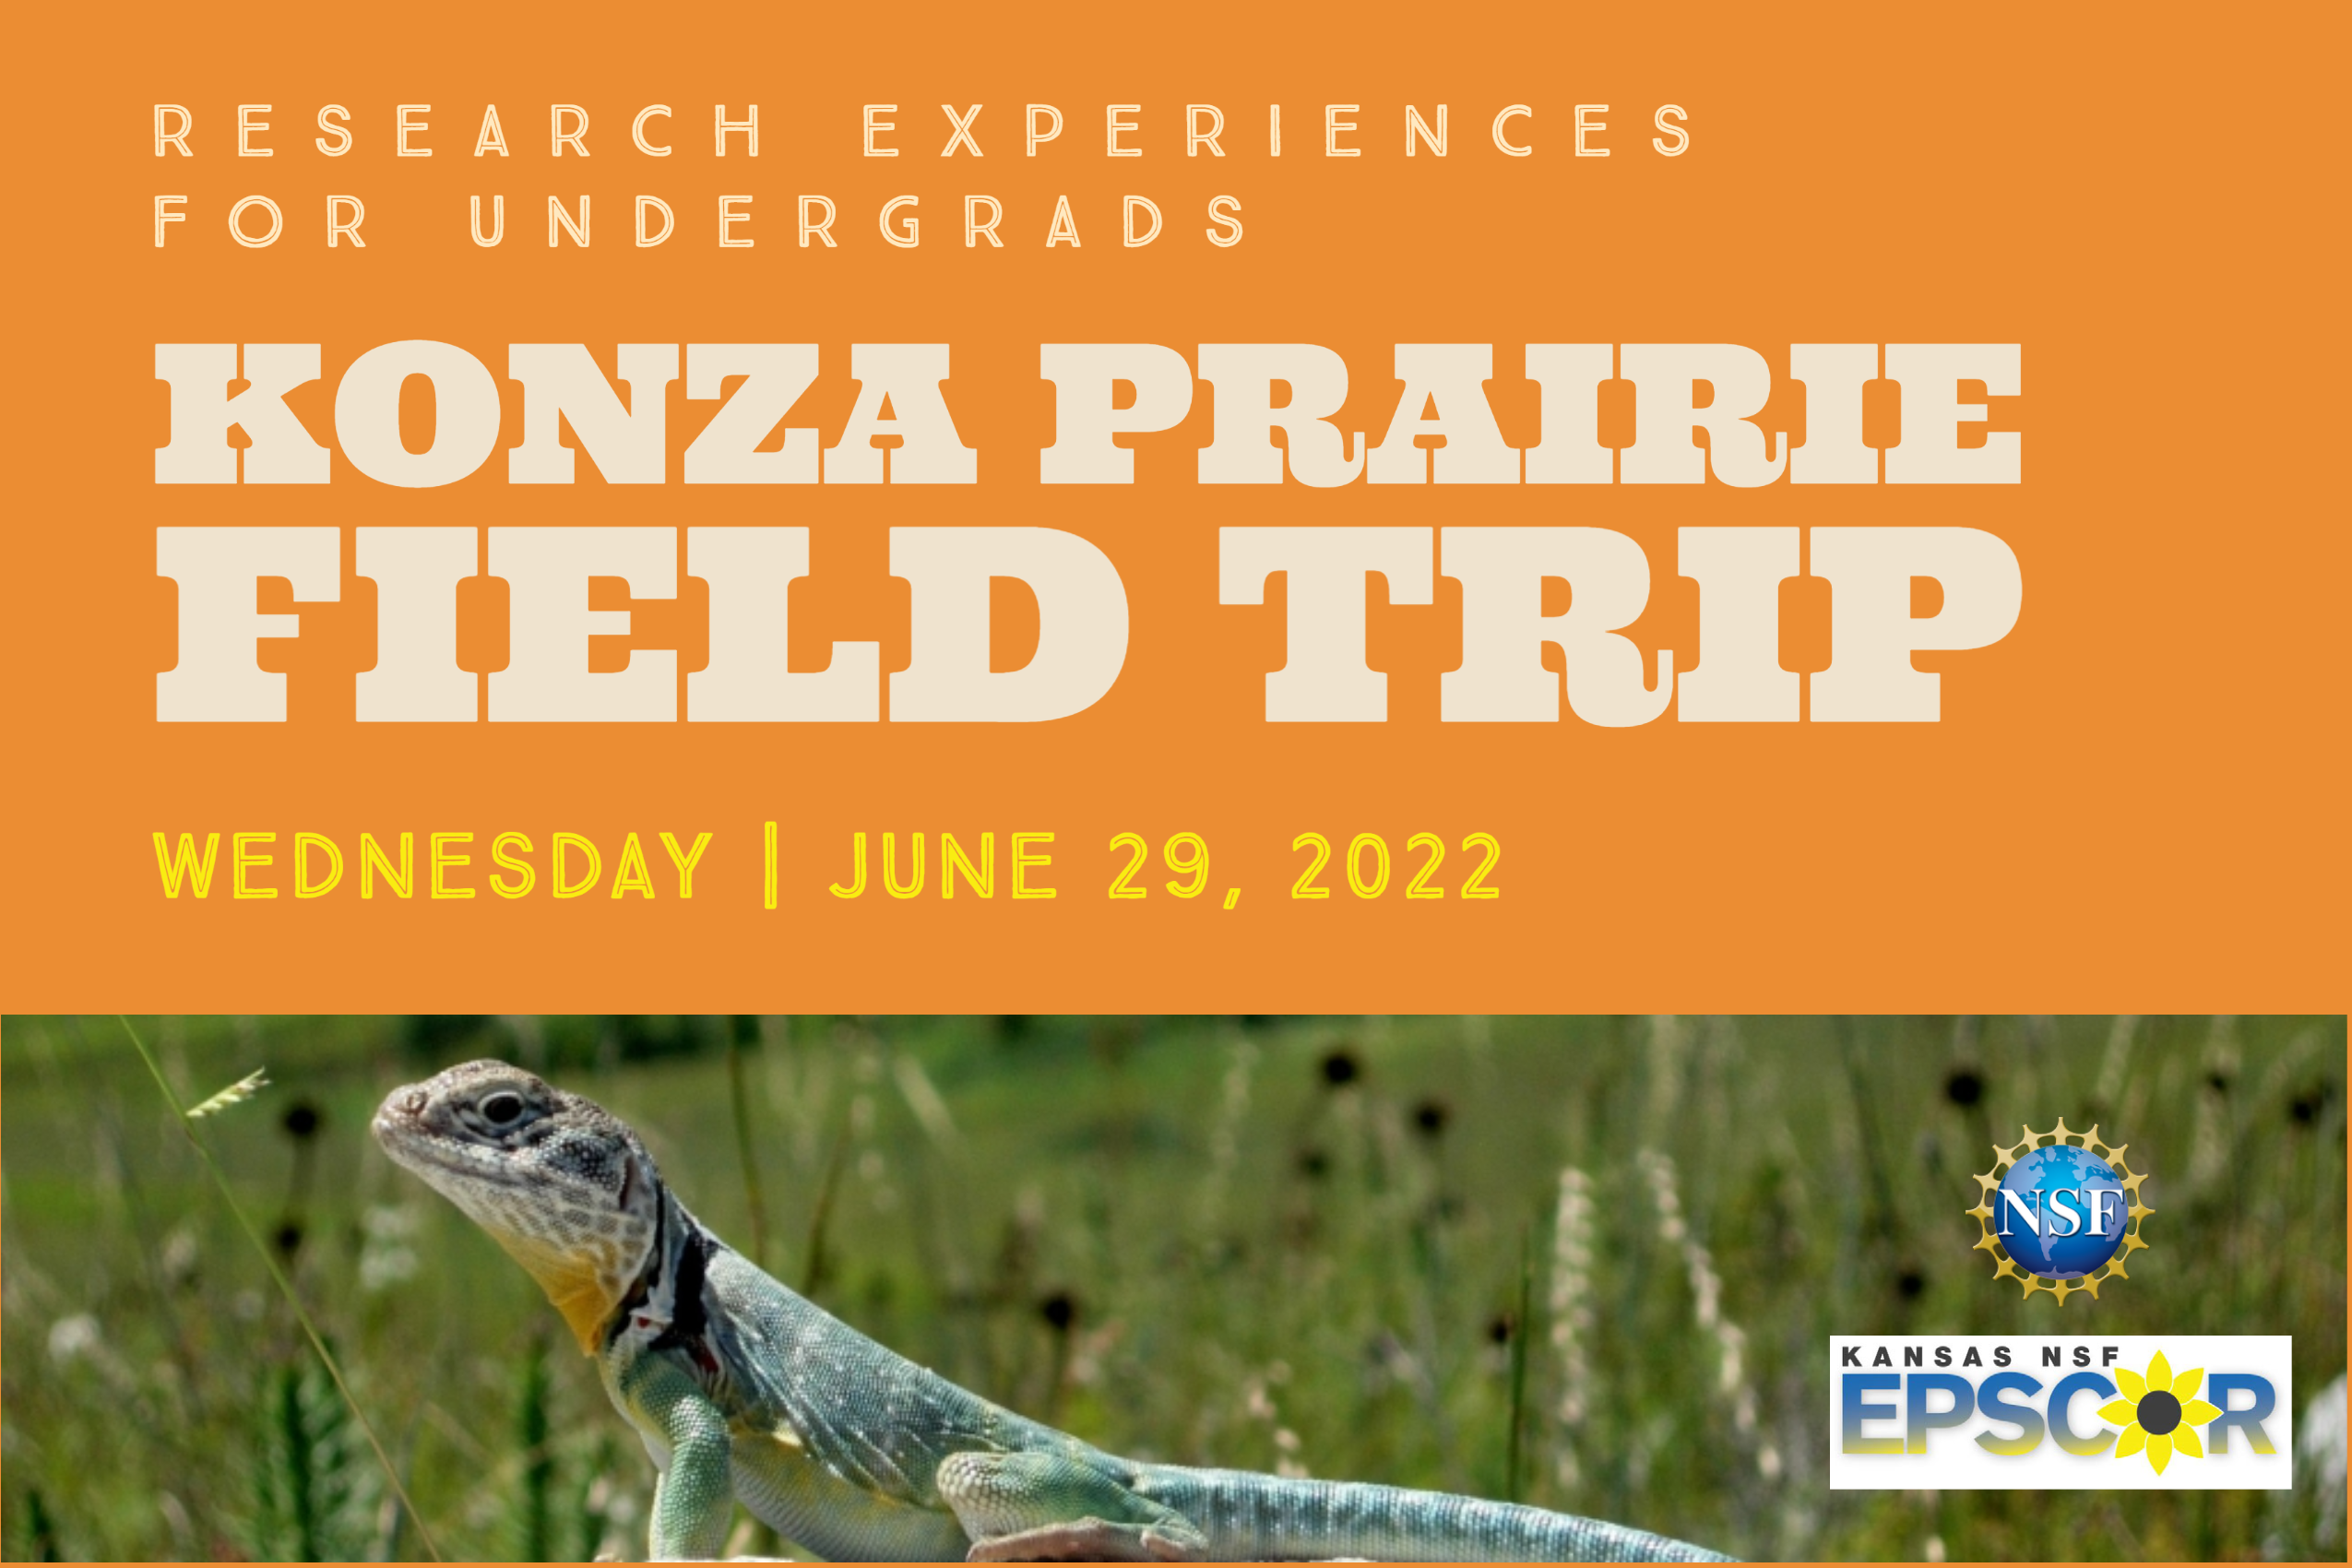 Konza prairie field trip image of lizard